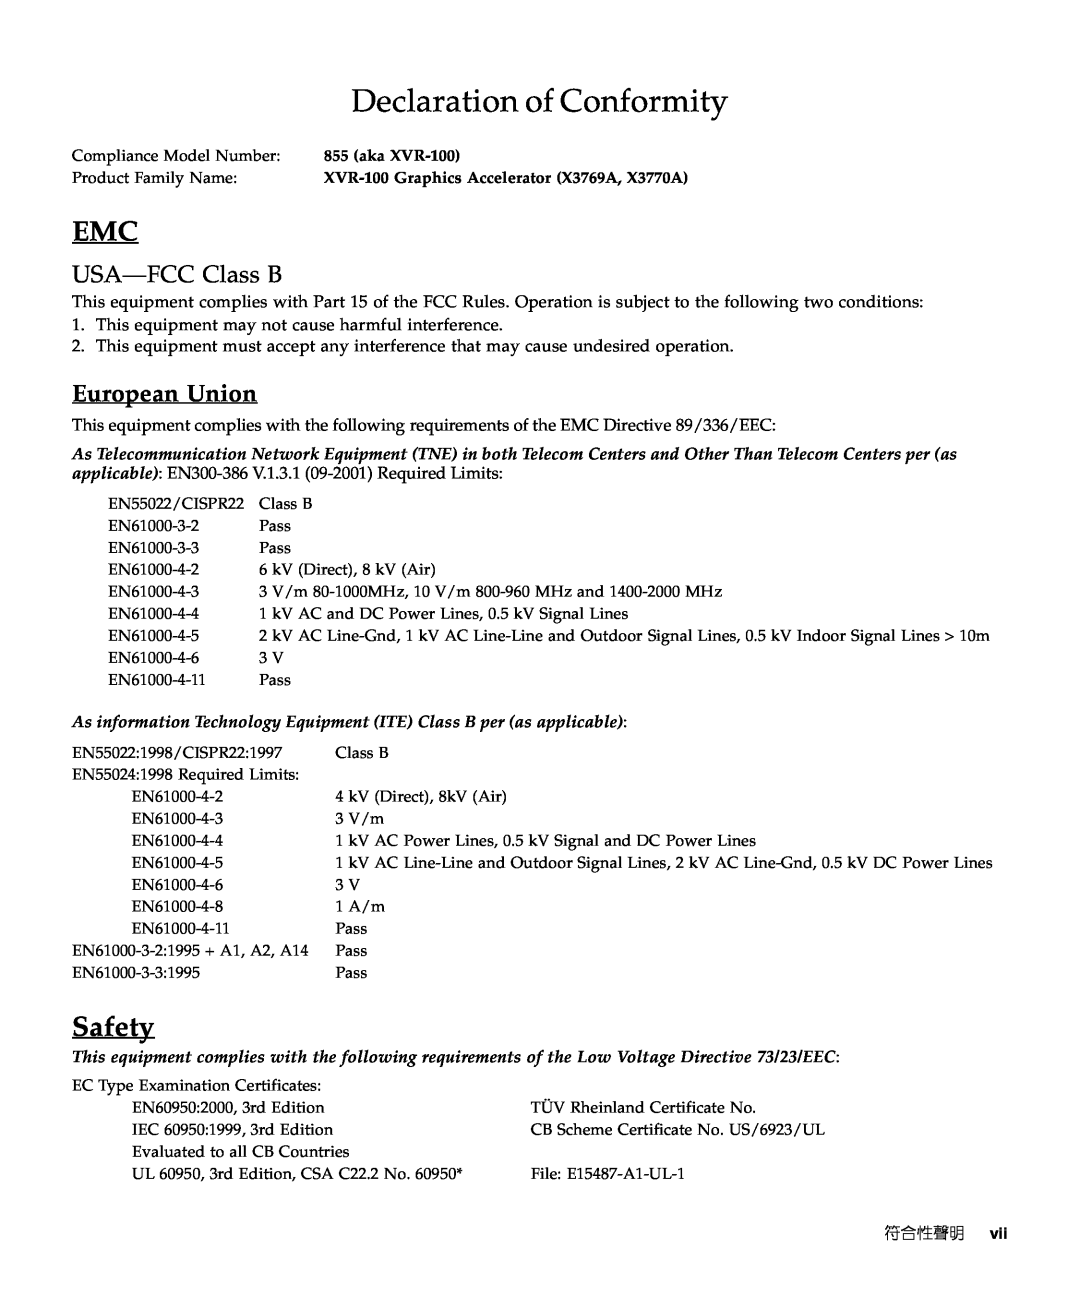 Sun Microsystems XVR-100 manual Declaration of Conformity, Safety, USA-FCC Class B, European Union, Compliance Model Number 